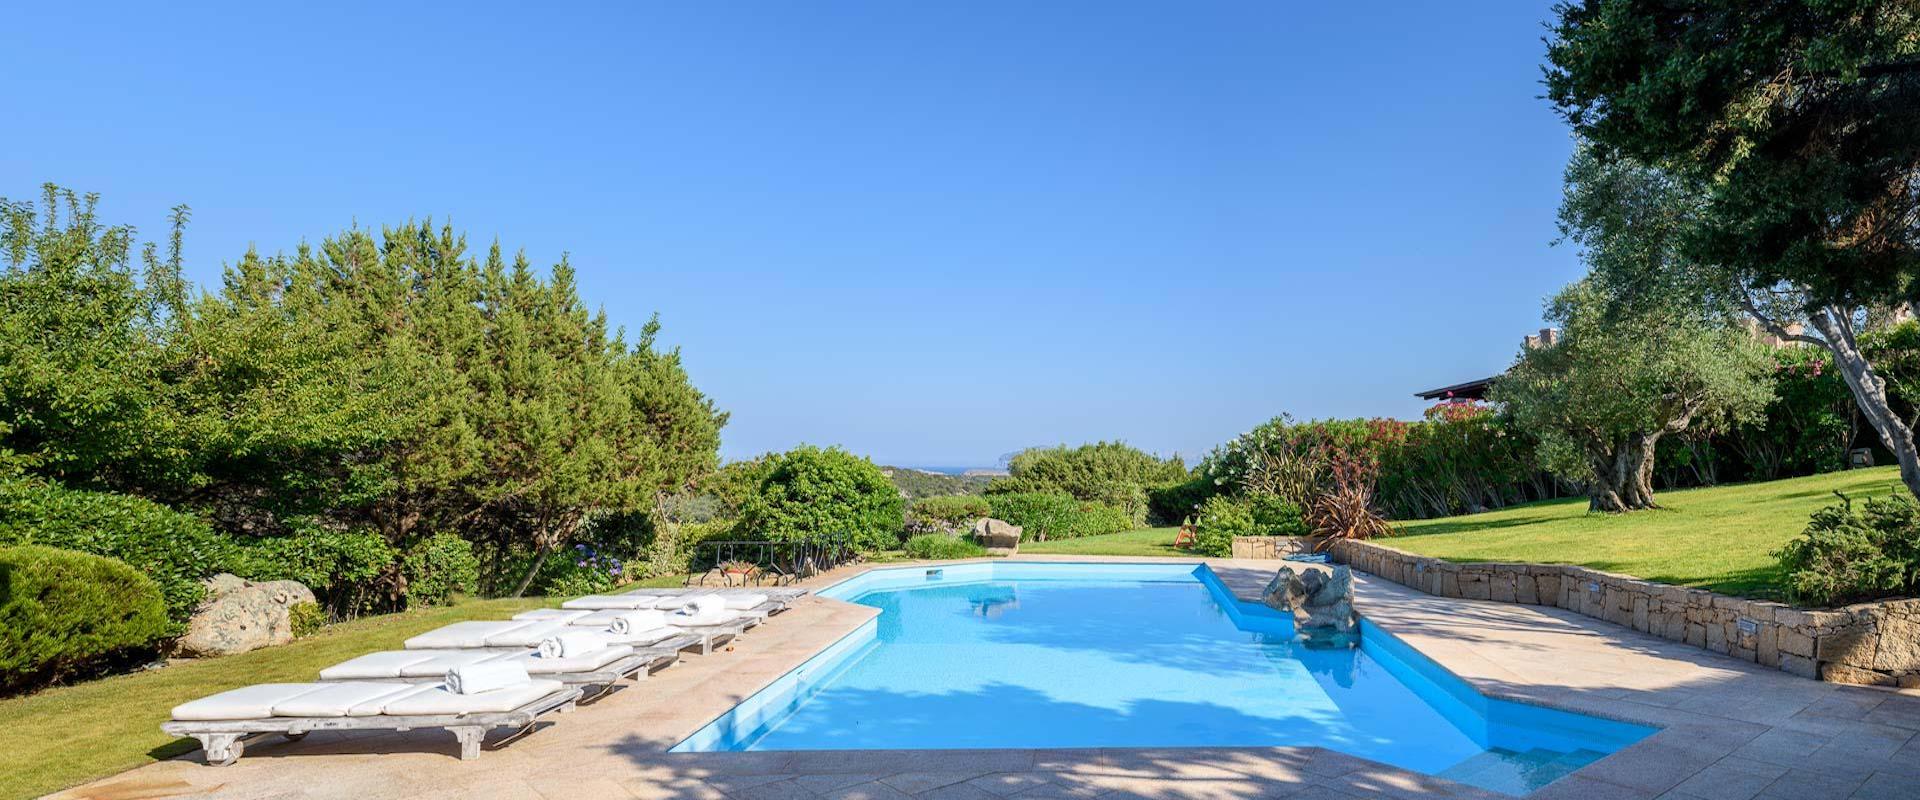 Villa Elide swimming pool